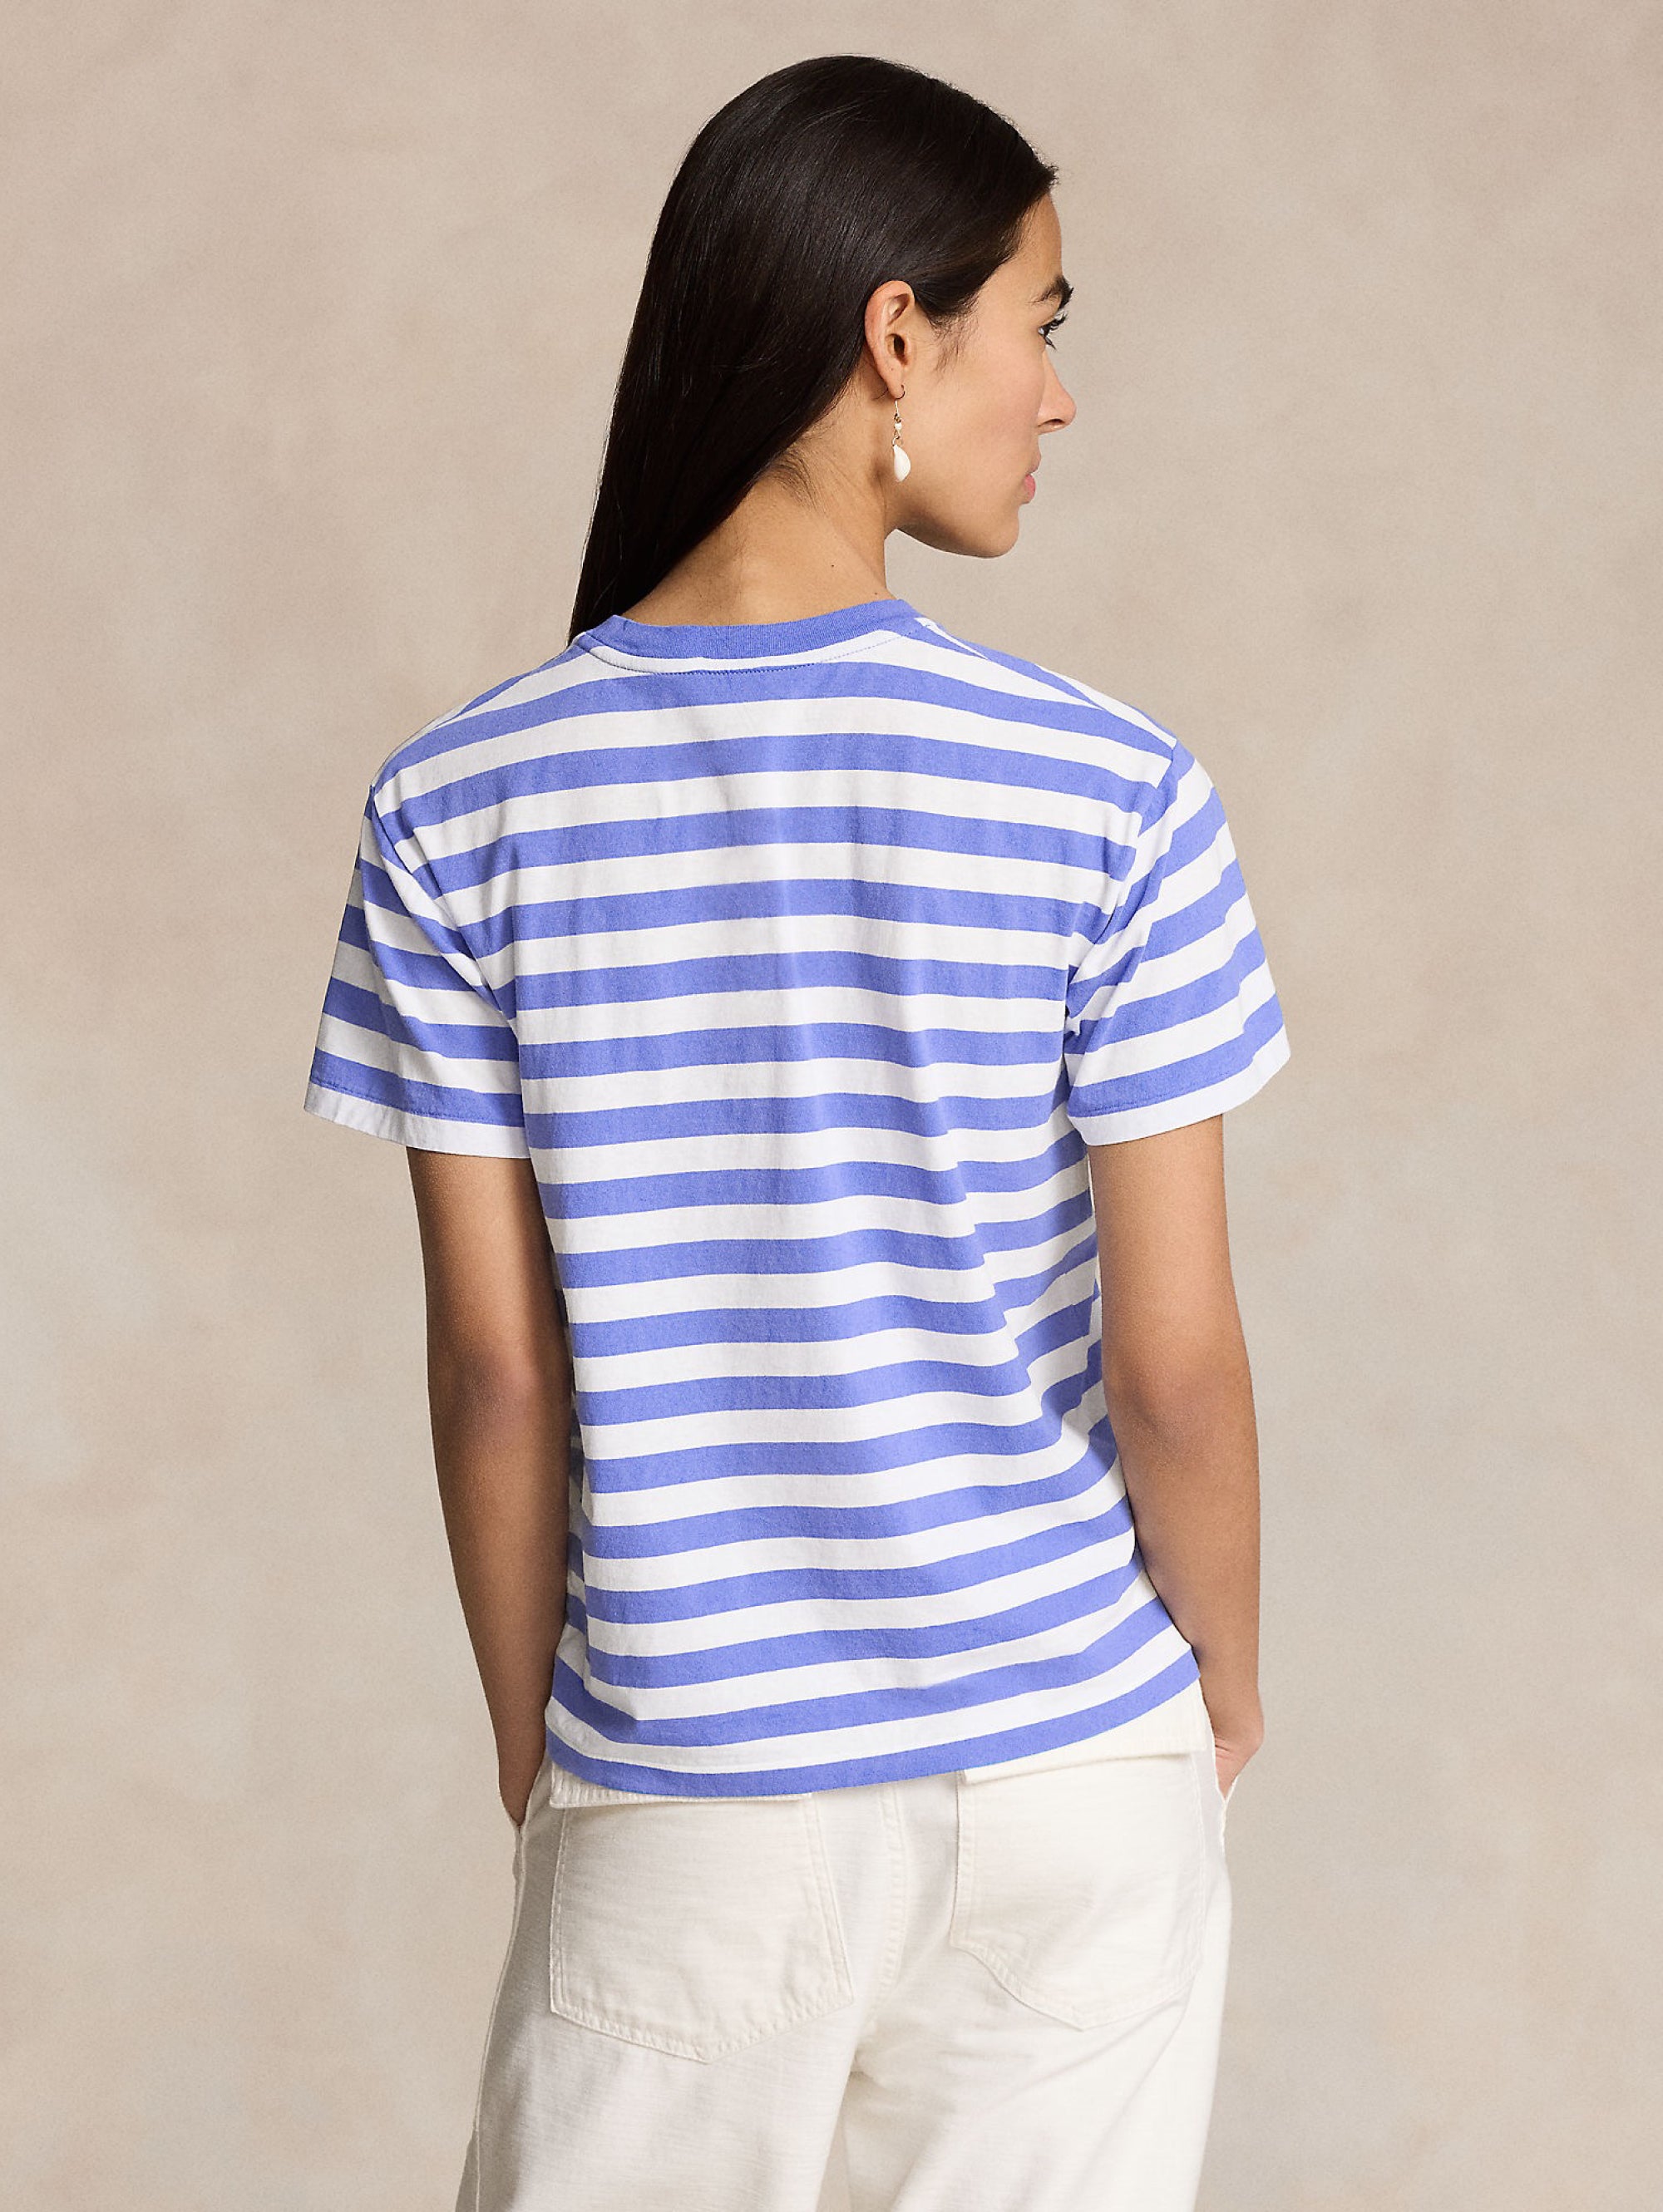 Gestreiftes T-Shirt mit weiß/blauem Polobär-Print